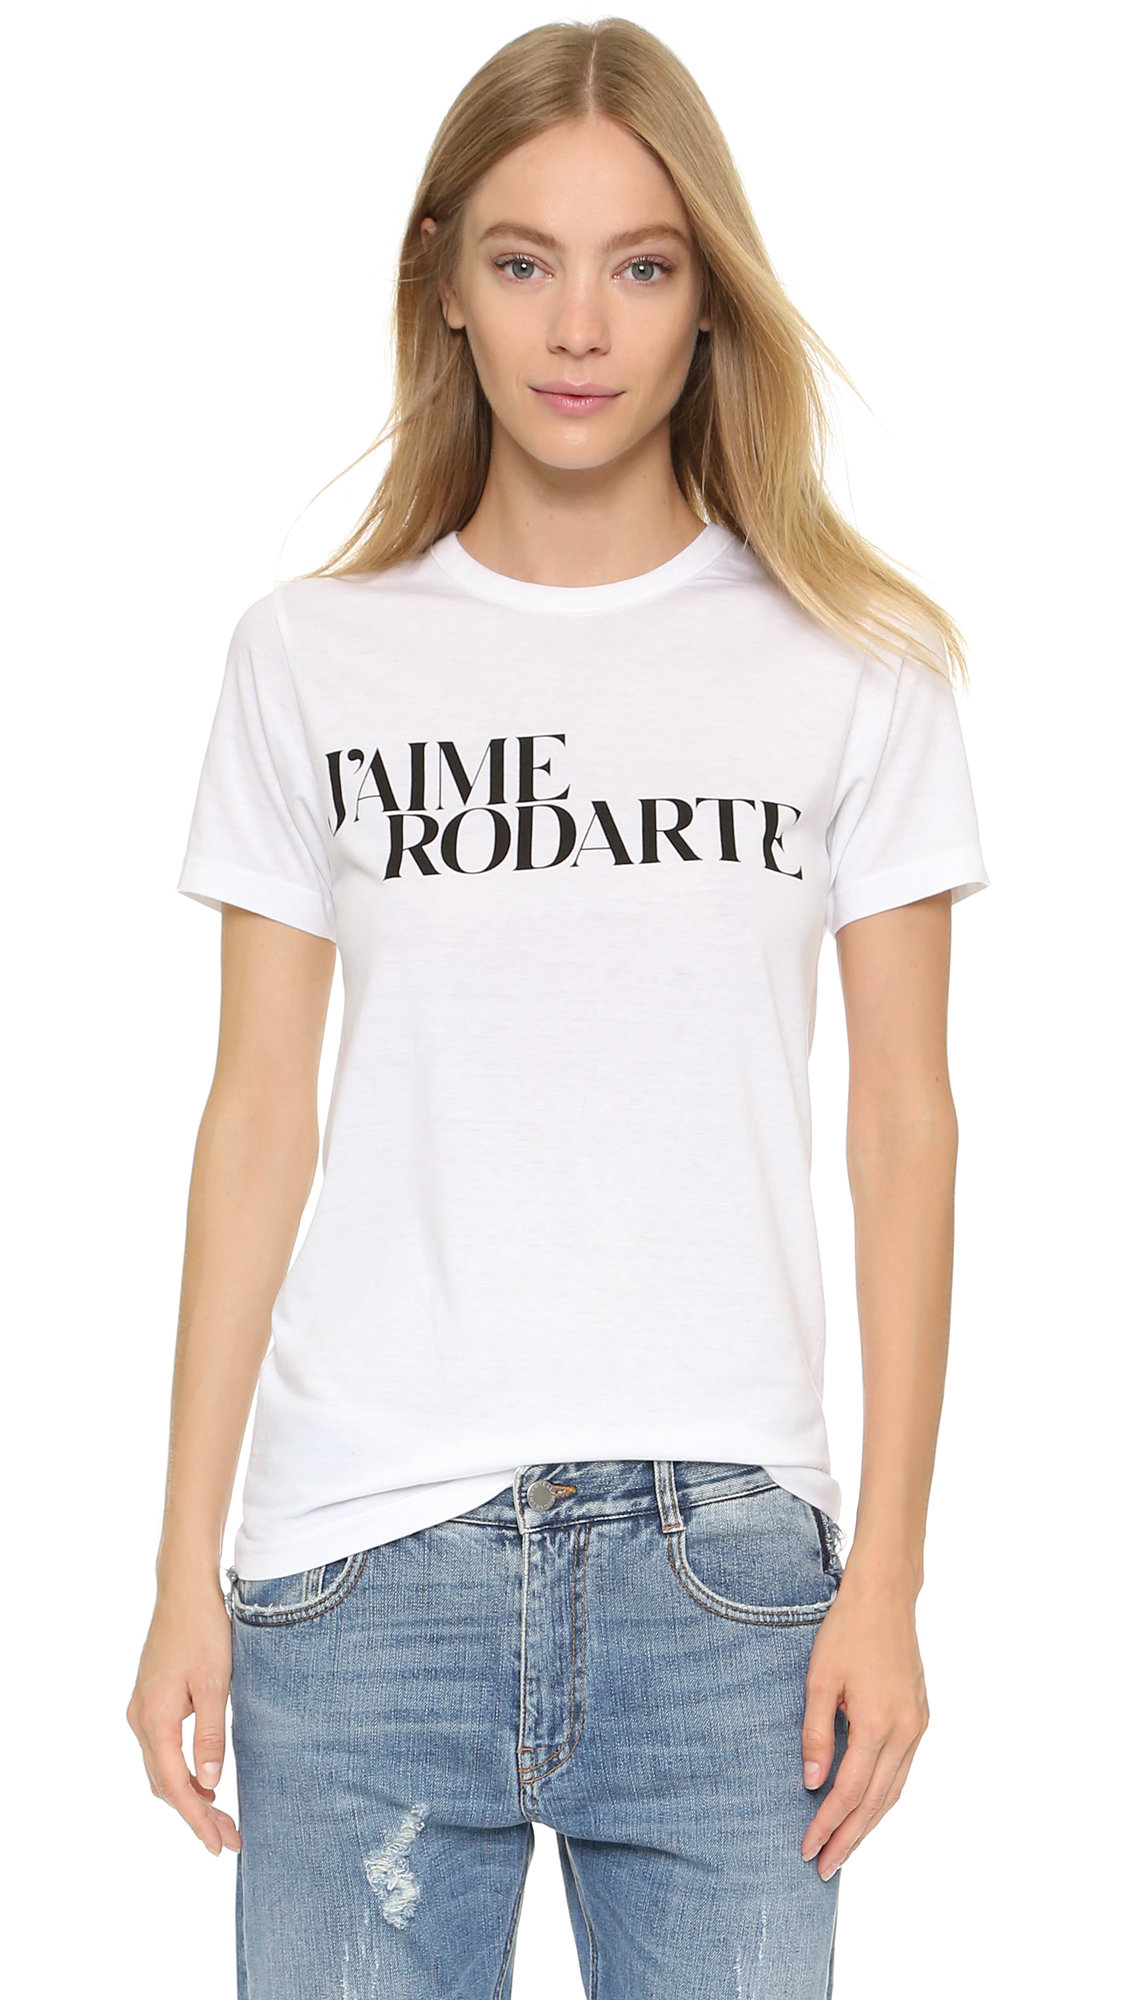 Rodarte Love / Hate T-shirt in White | Lyst